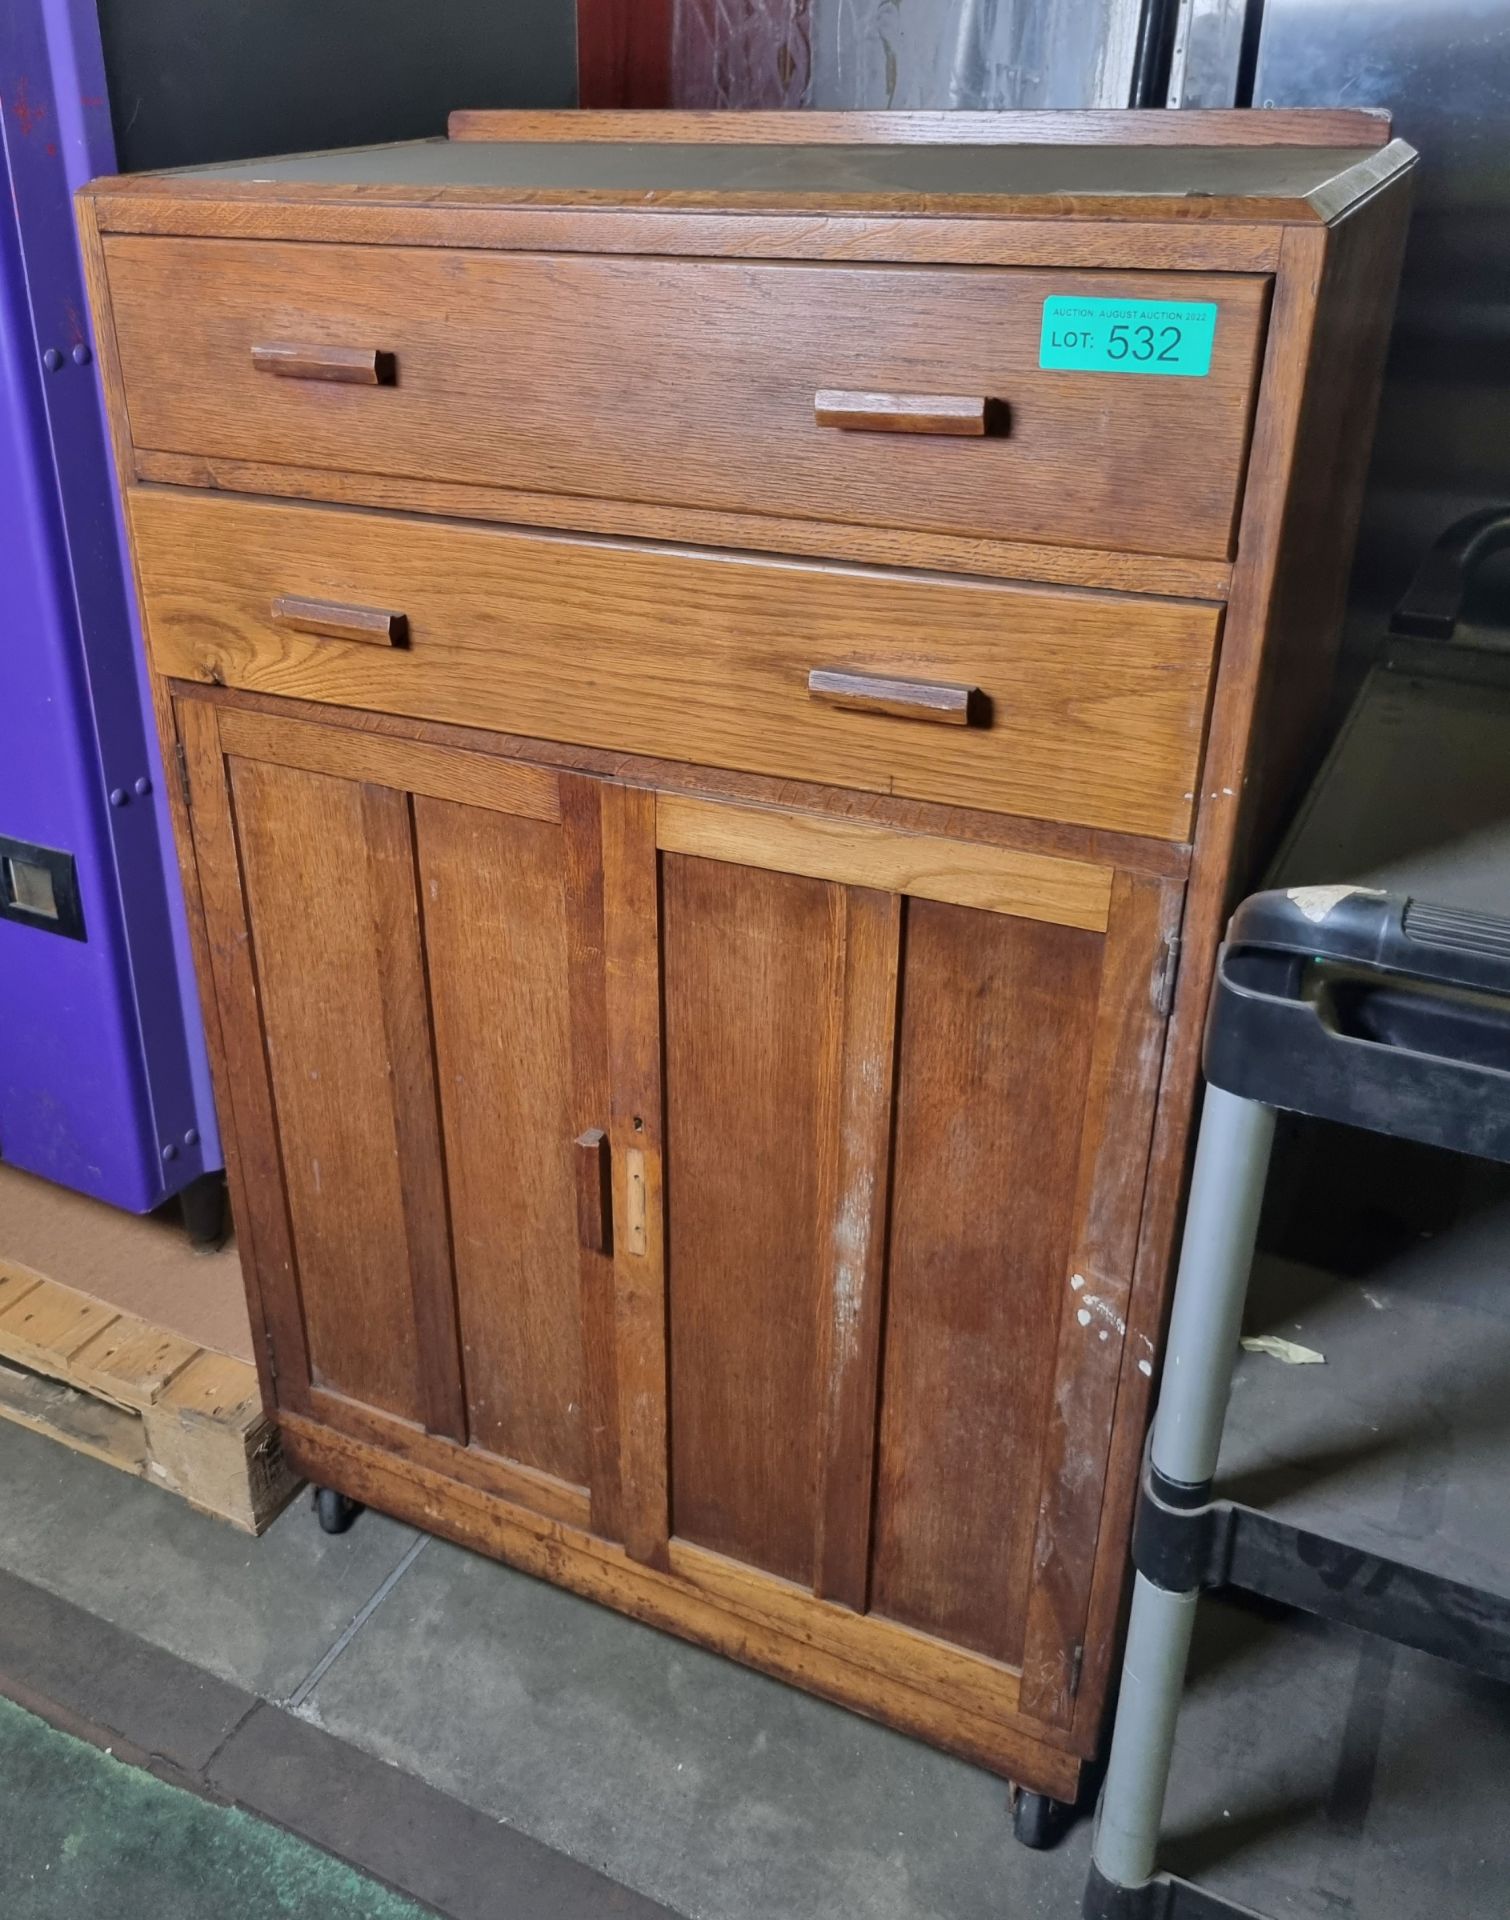 2 drawer 3 shelf wooden cabinet - L85 x W50 x H130cm - Image 2 of 7